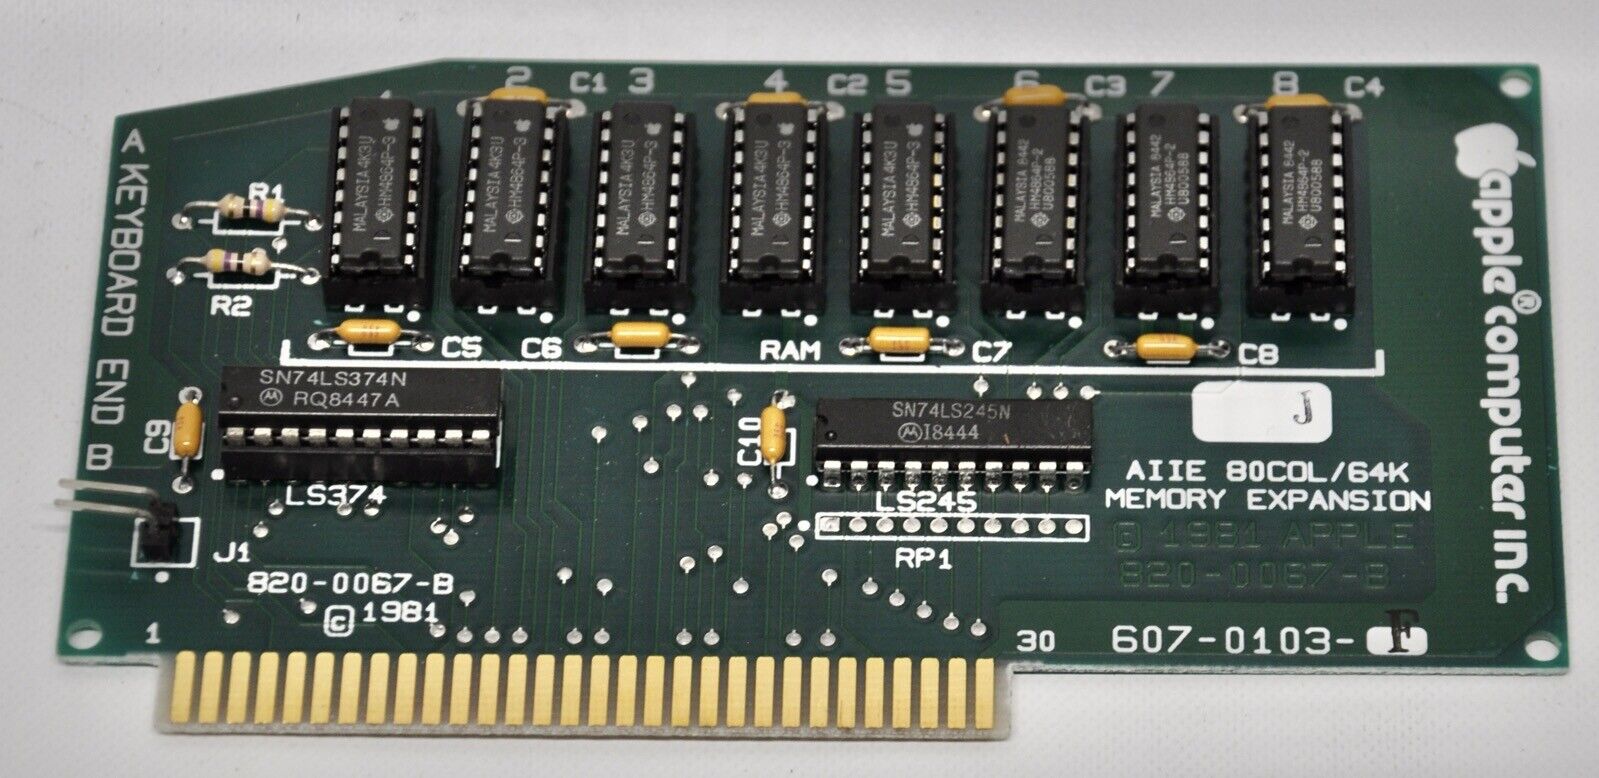 Vintage Apple // - Used Apple 1981 AIIE 80Col/64K Memory Expansion Board